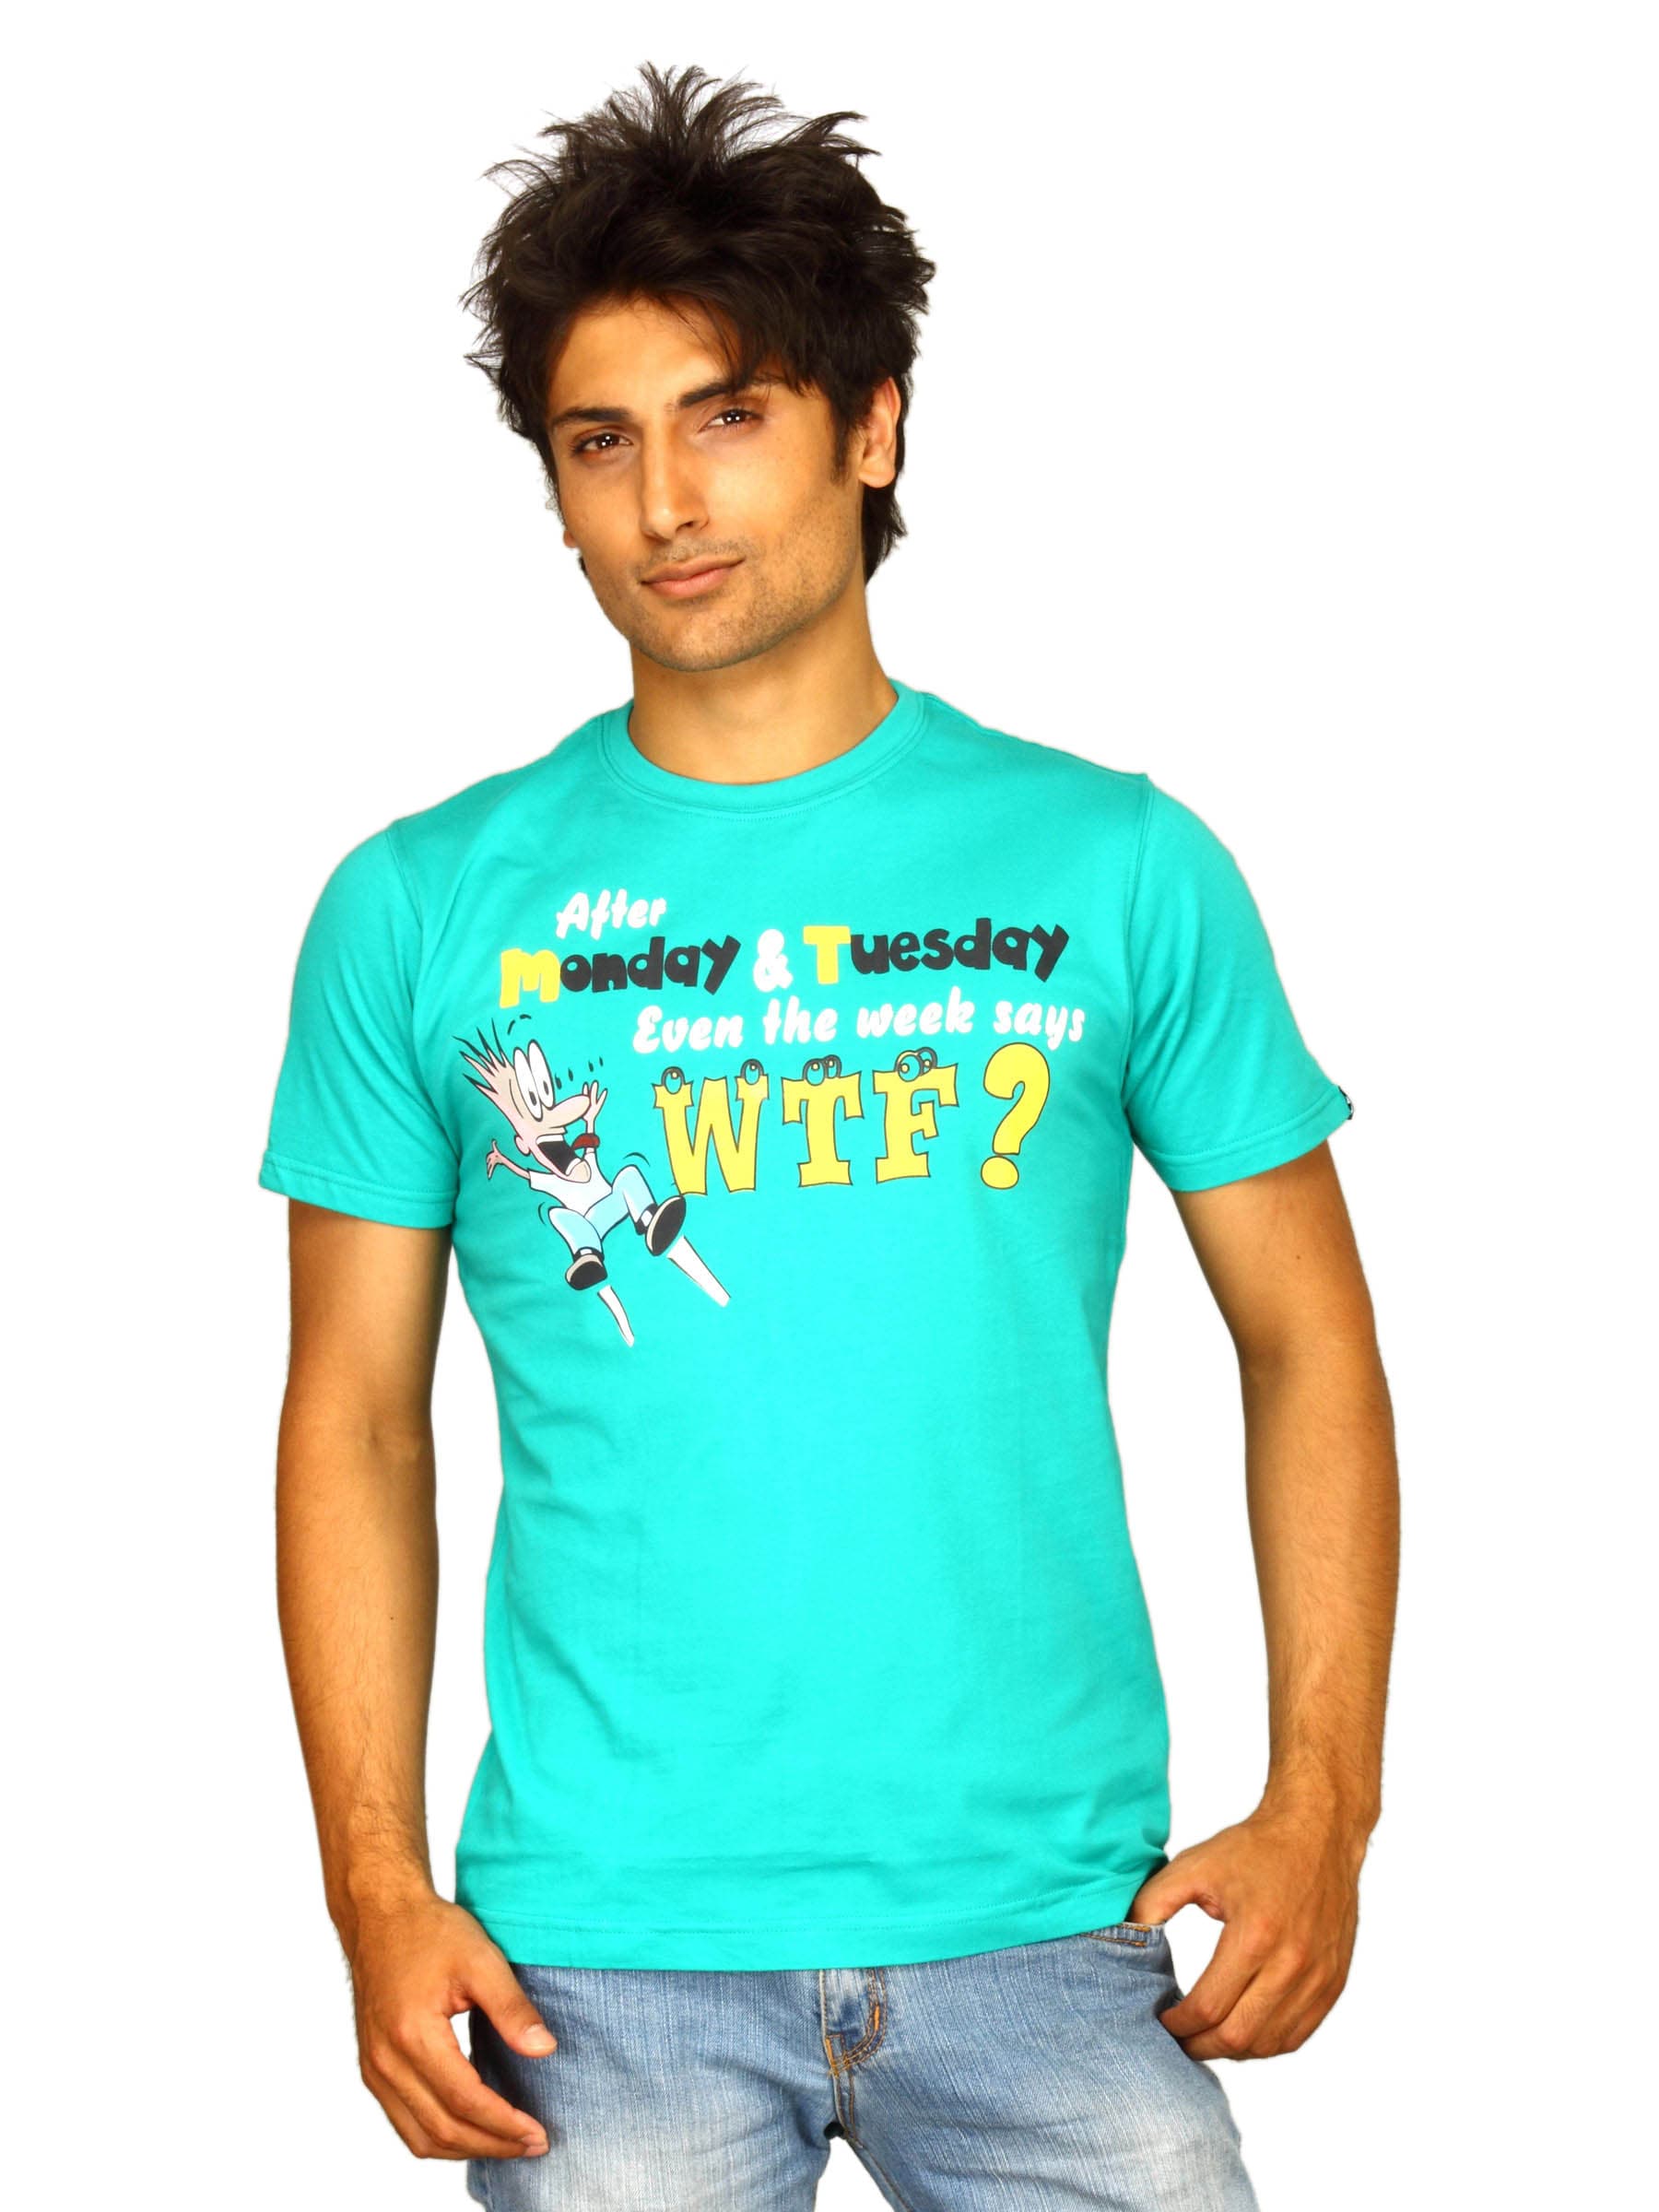 Probase Men's Wtf Turquoise T-Shirt